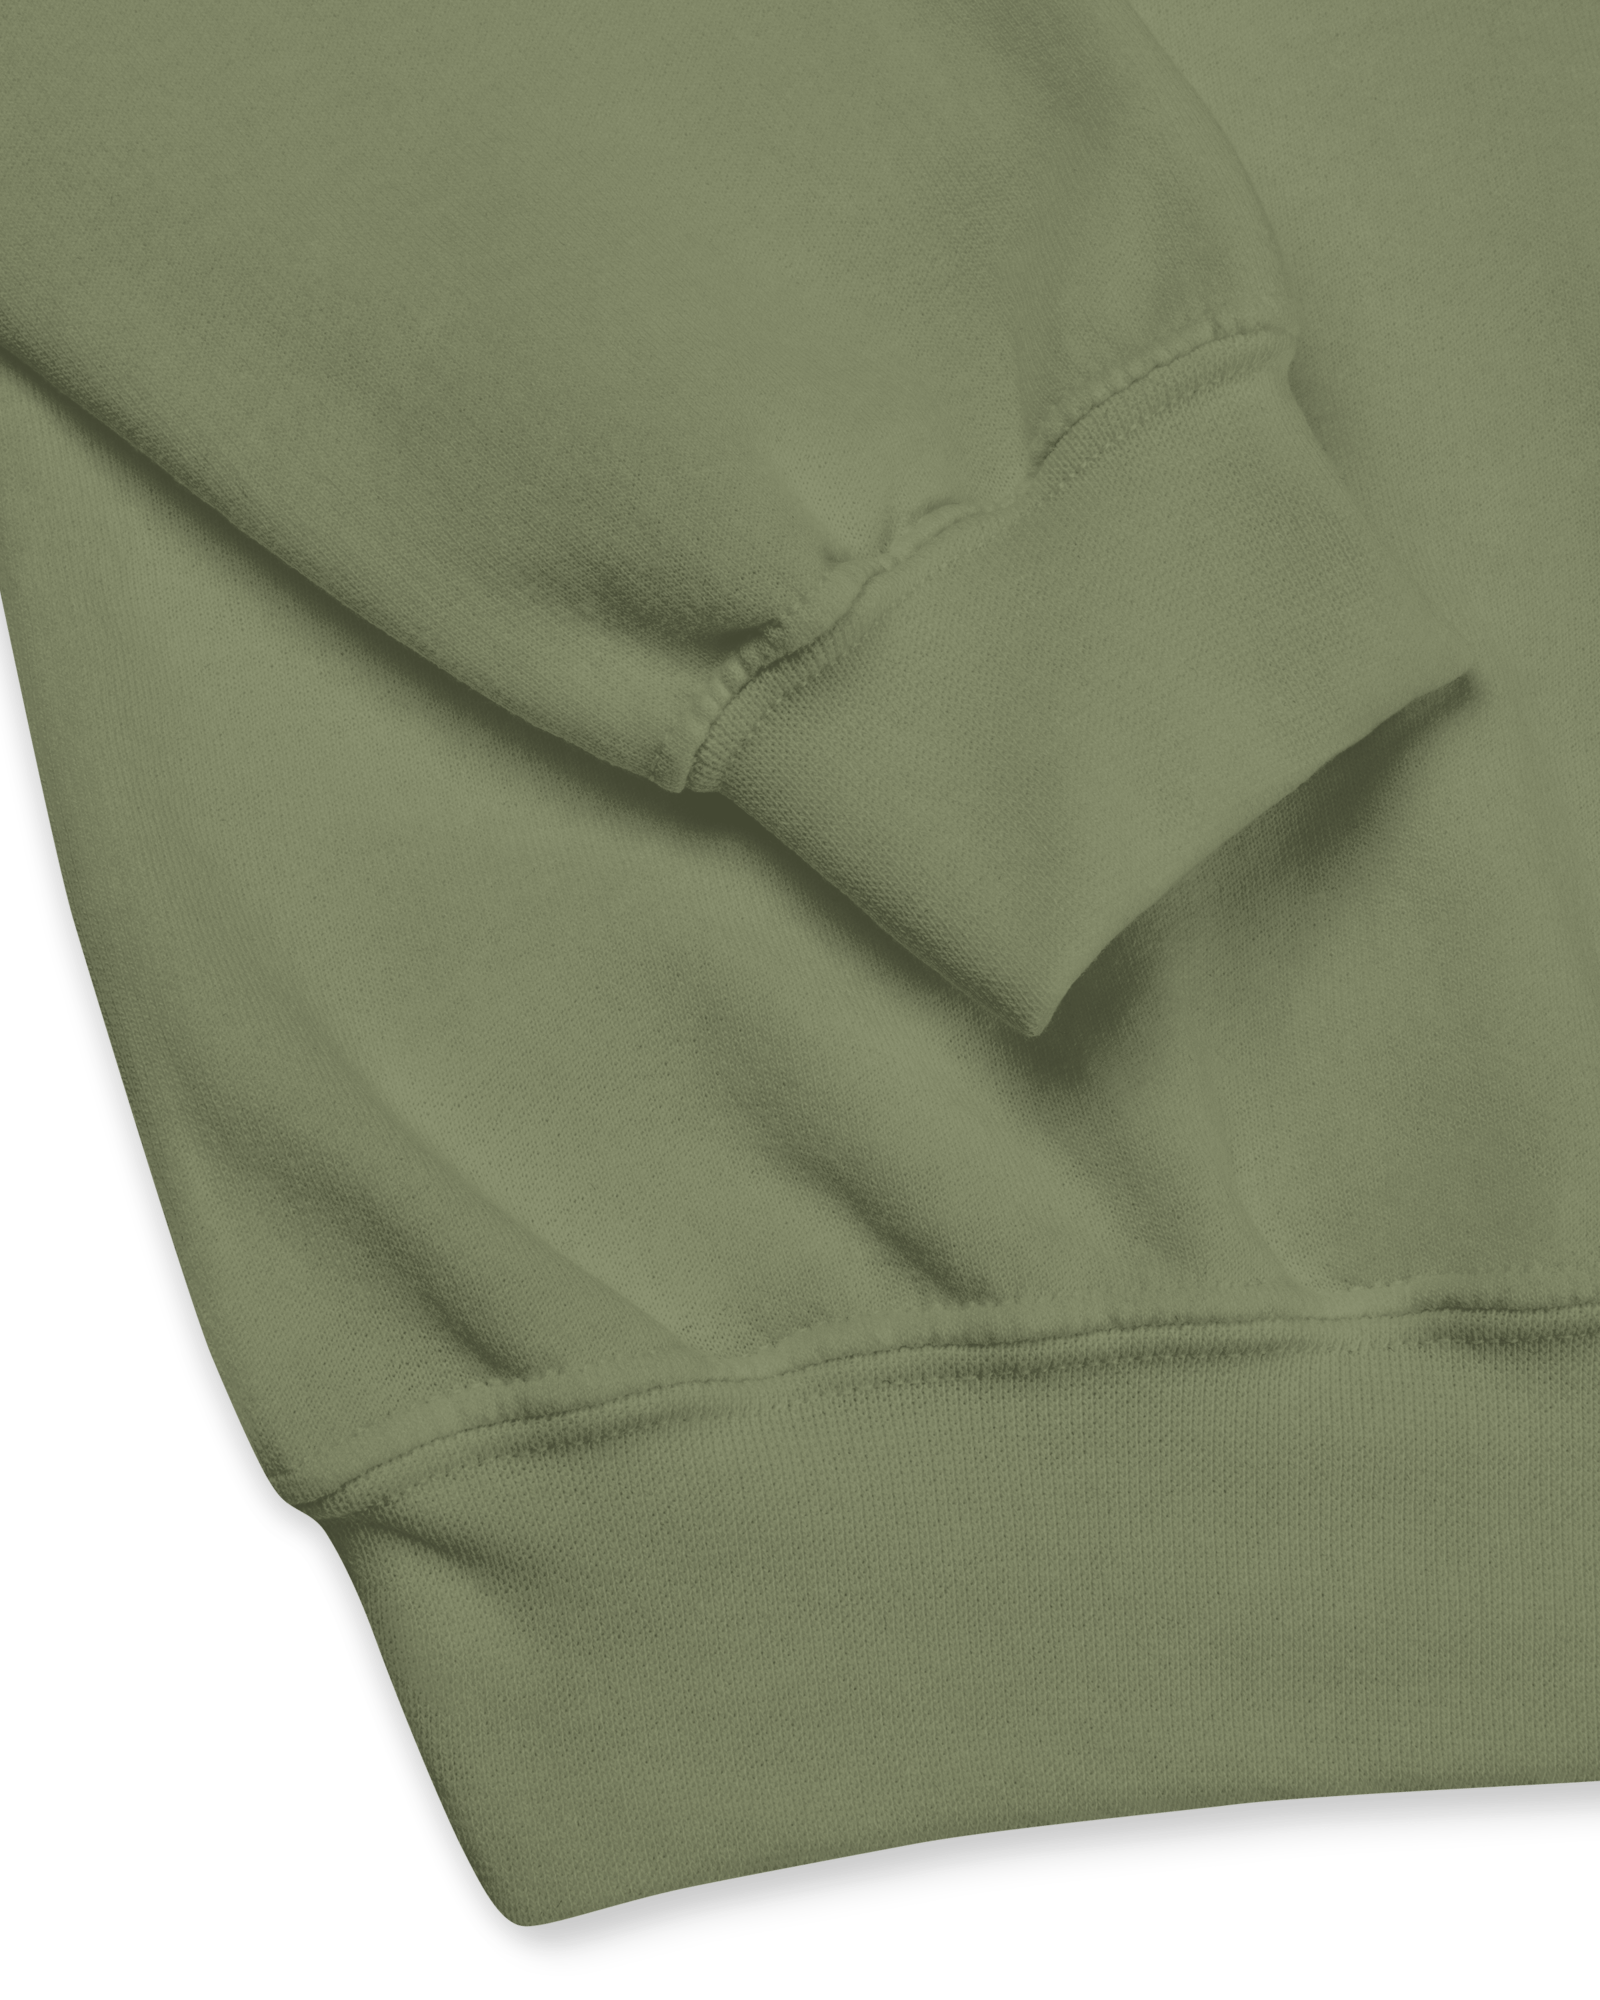 Barmy Sweatshirt Jumper | Unisex Sweatshirt Jolly & Goode